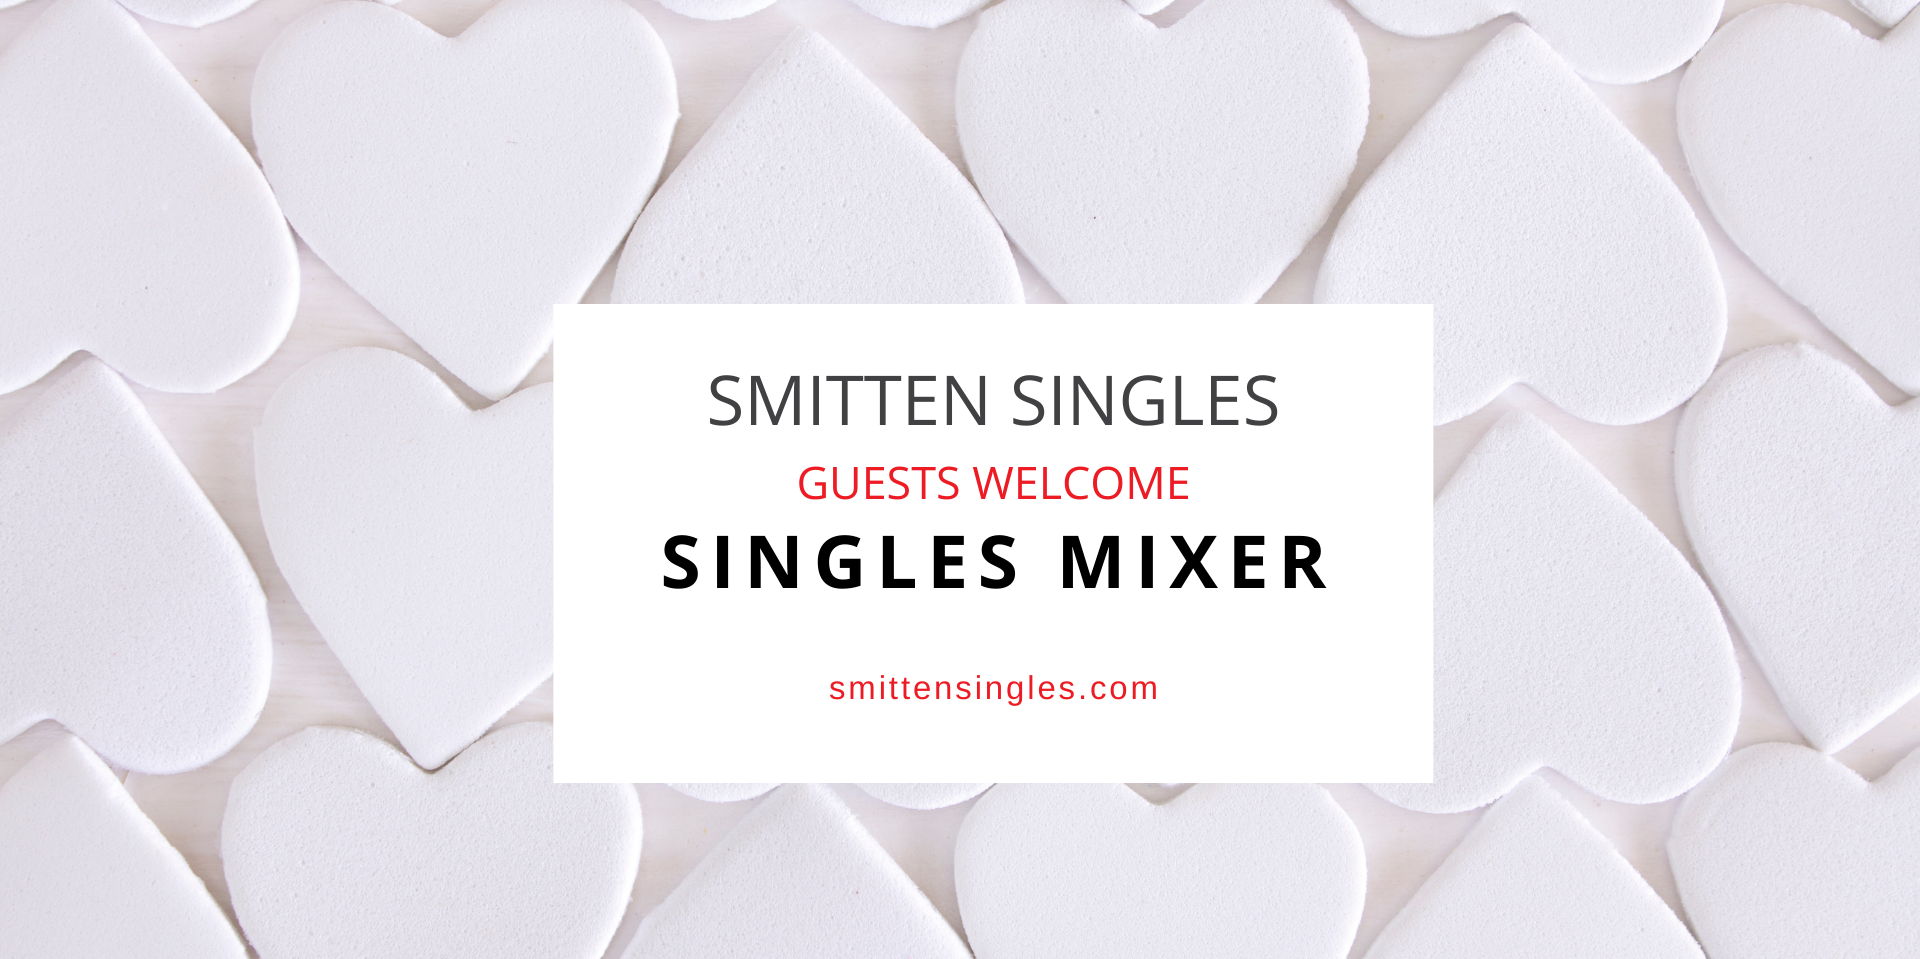 Singles Mini Mixer promotional image